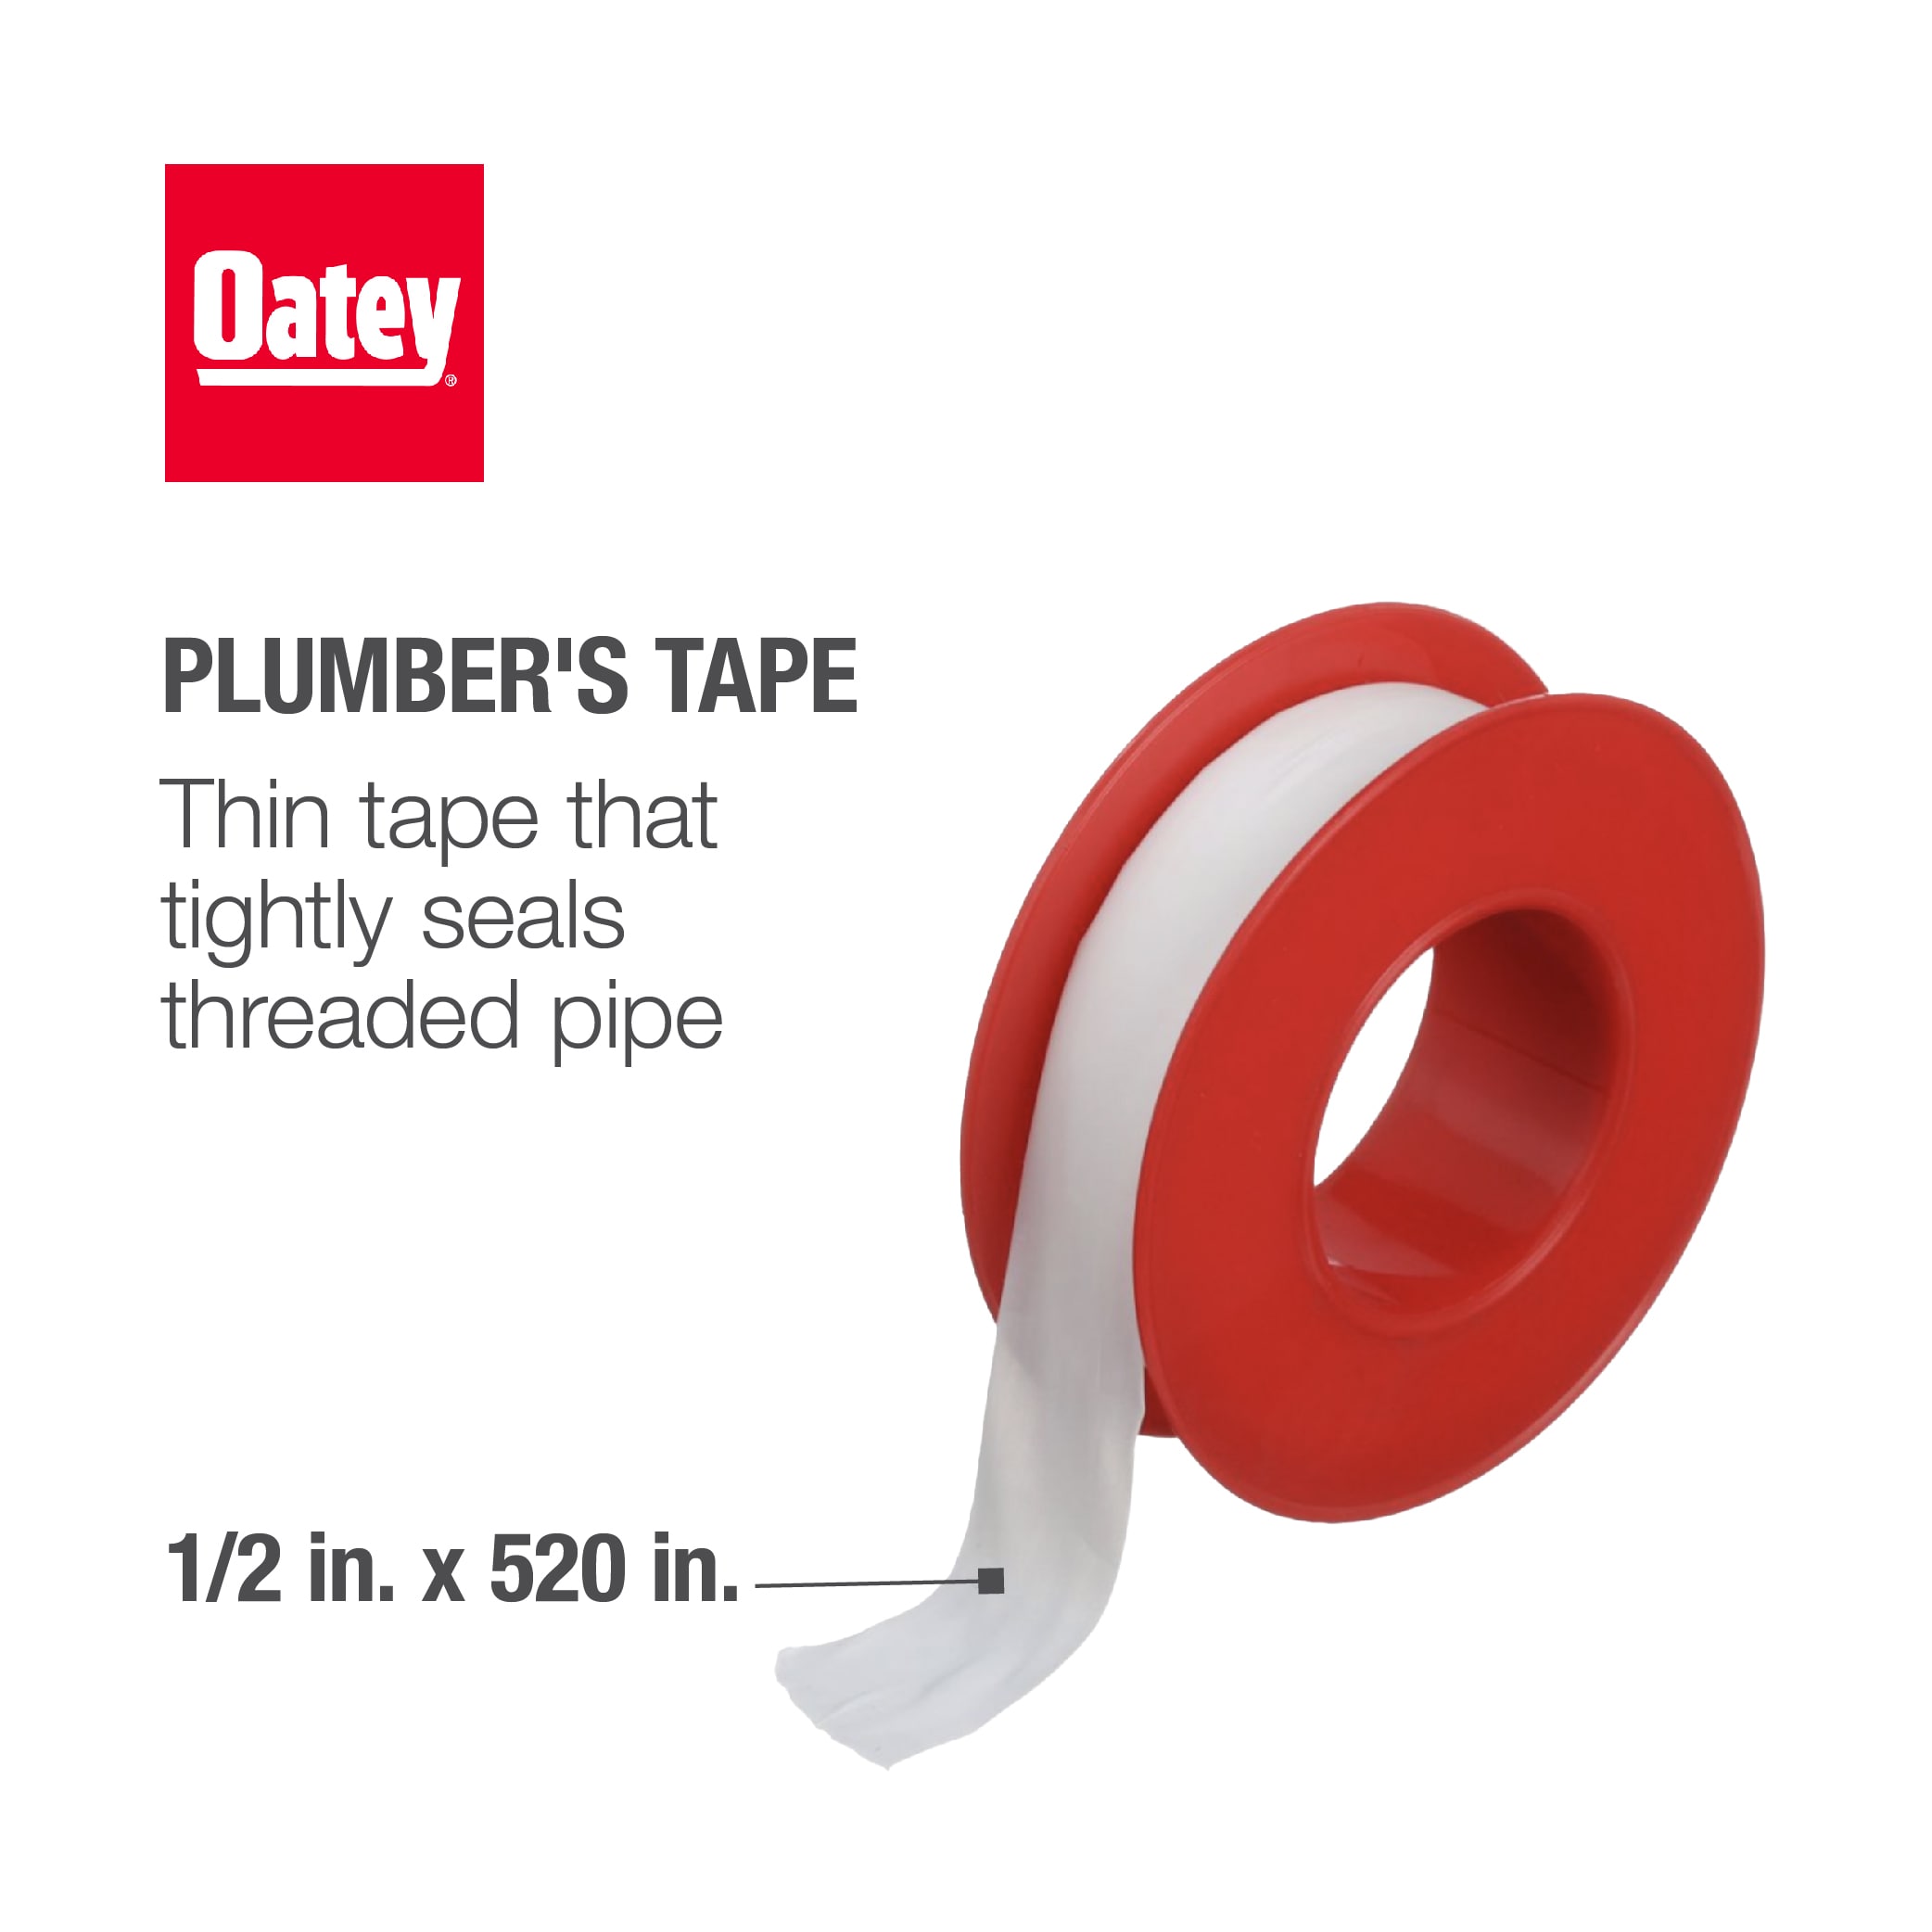 Oatey 0.5-in x 43-ft Plumber's Tape in the Plumbers Tape